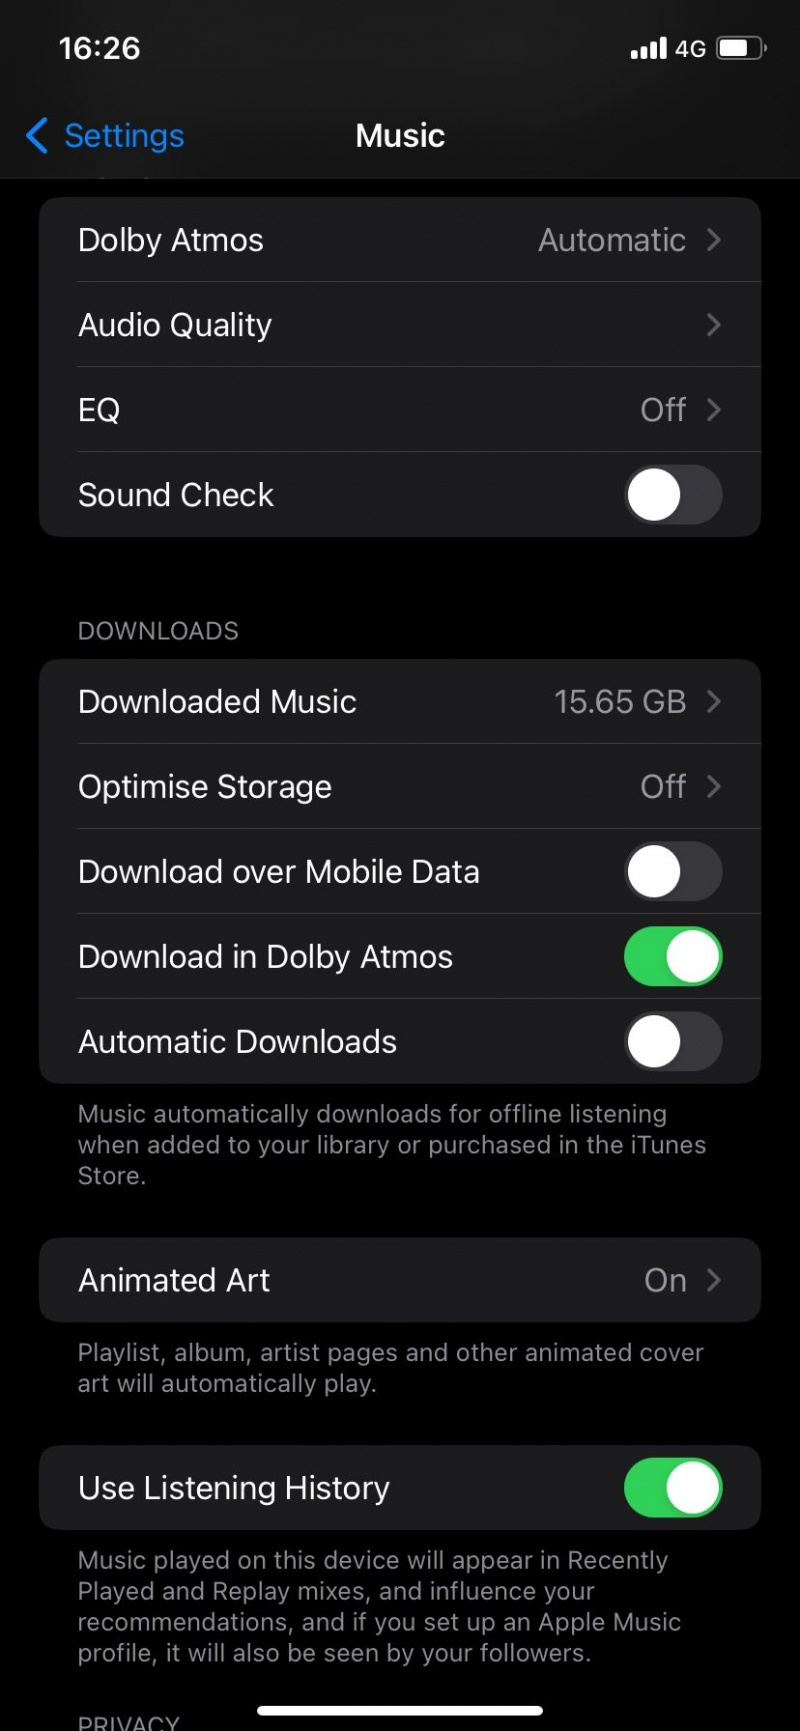   Apple Music에서 비활성화된 모바일 데이터를 통한 다운로드